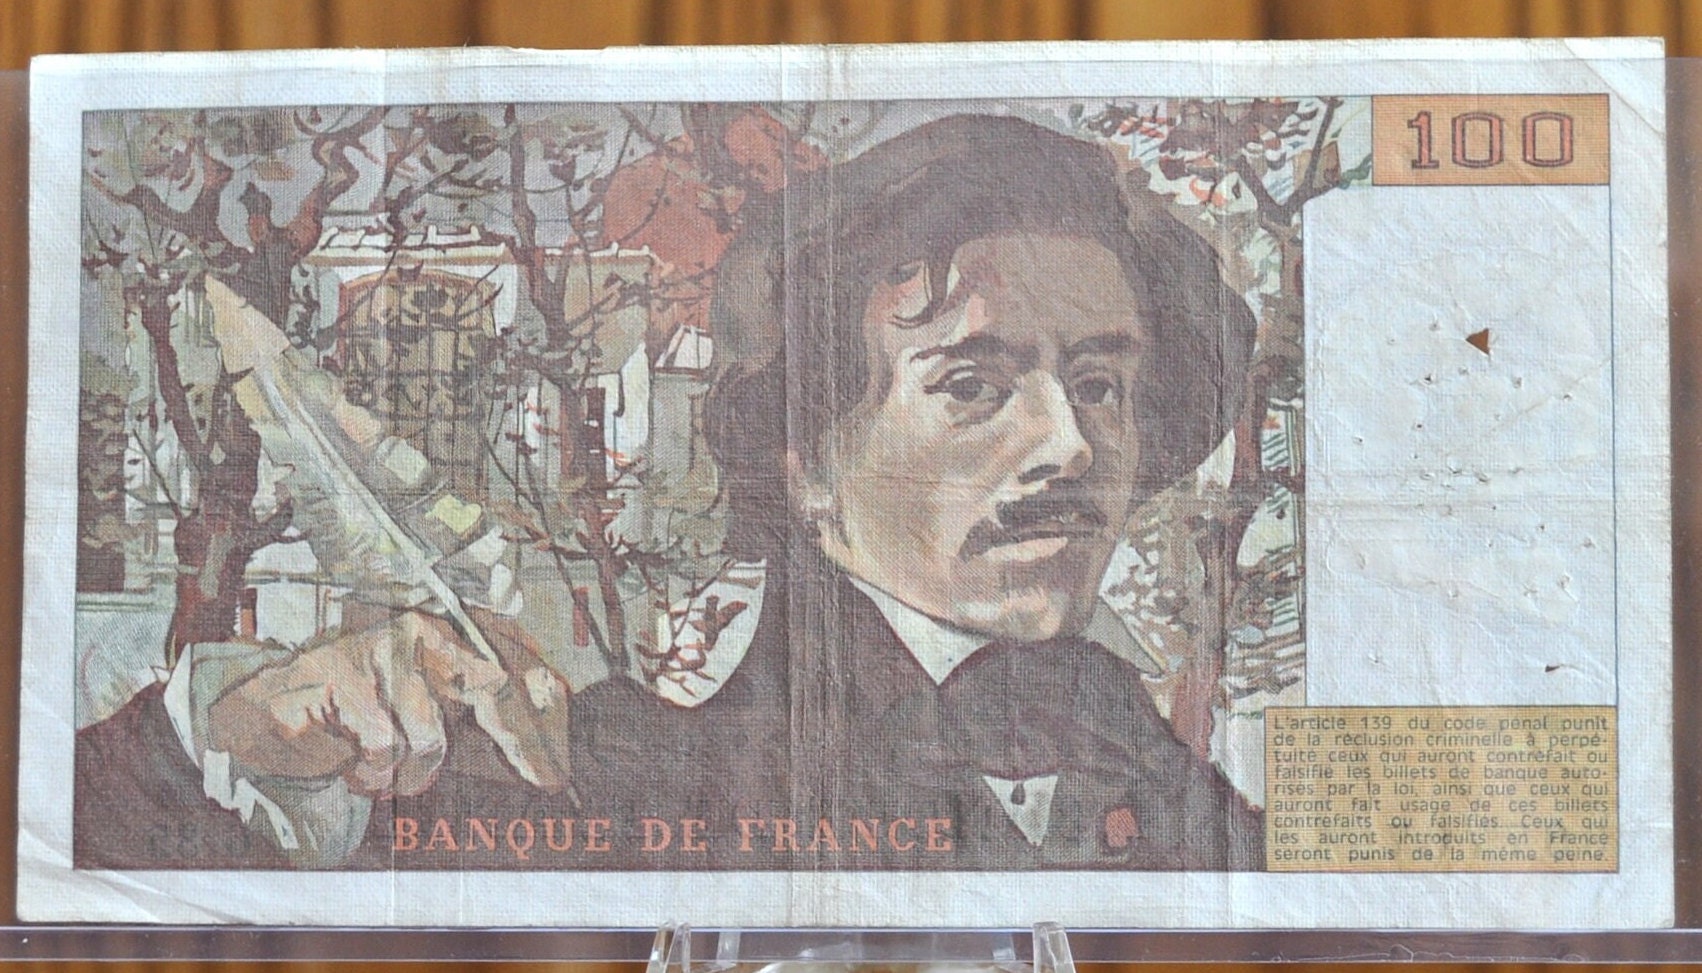 1980 France 100 Franc Banknote - Eugene Delacroix Type - Pick Number 154a (P#154a) - French One Hundred Francs Banknote 1980